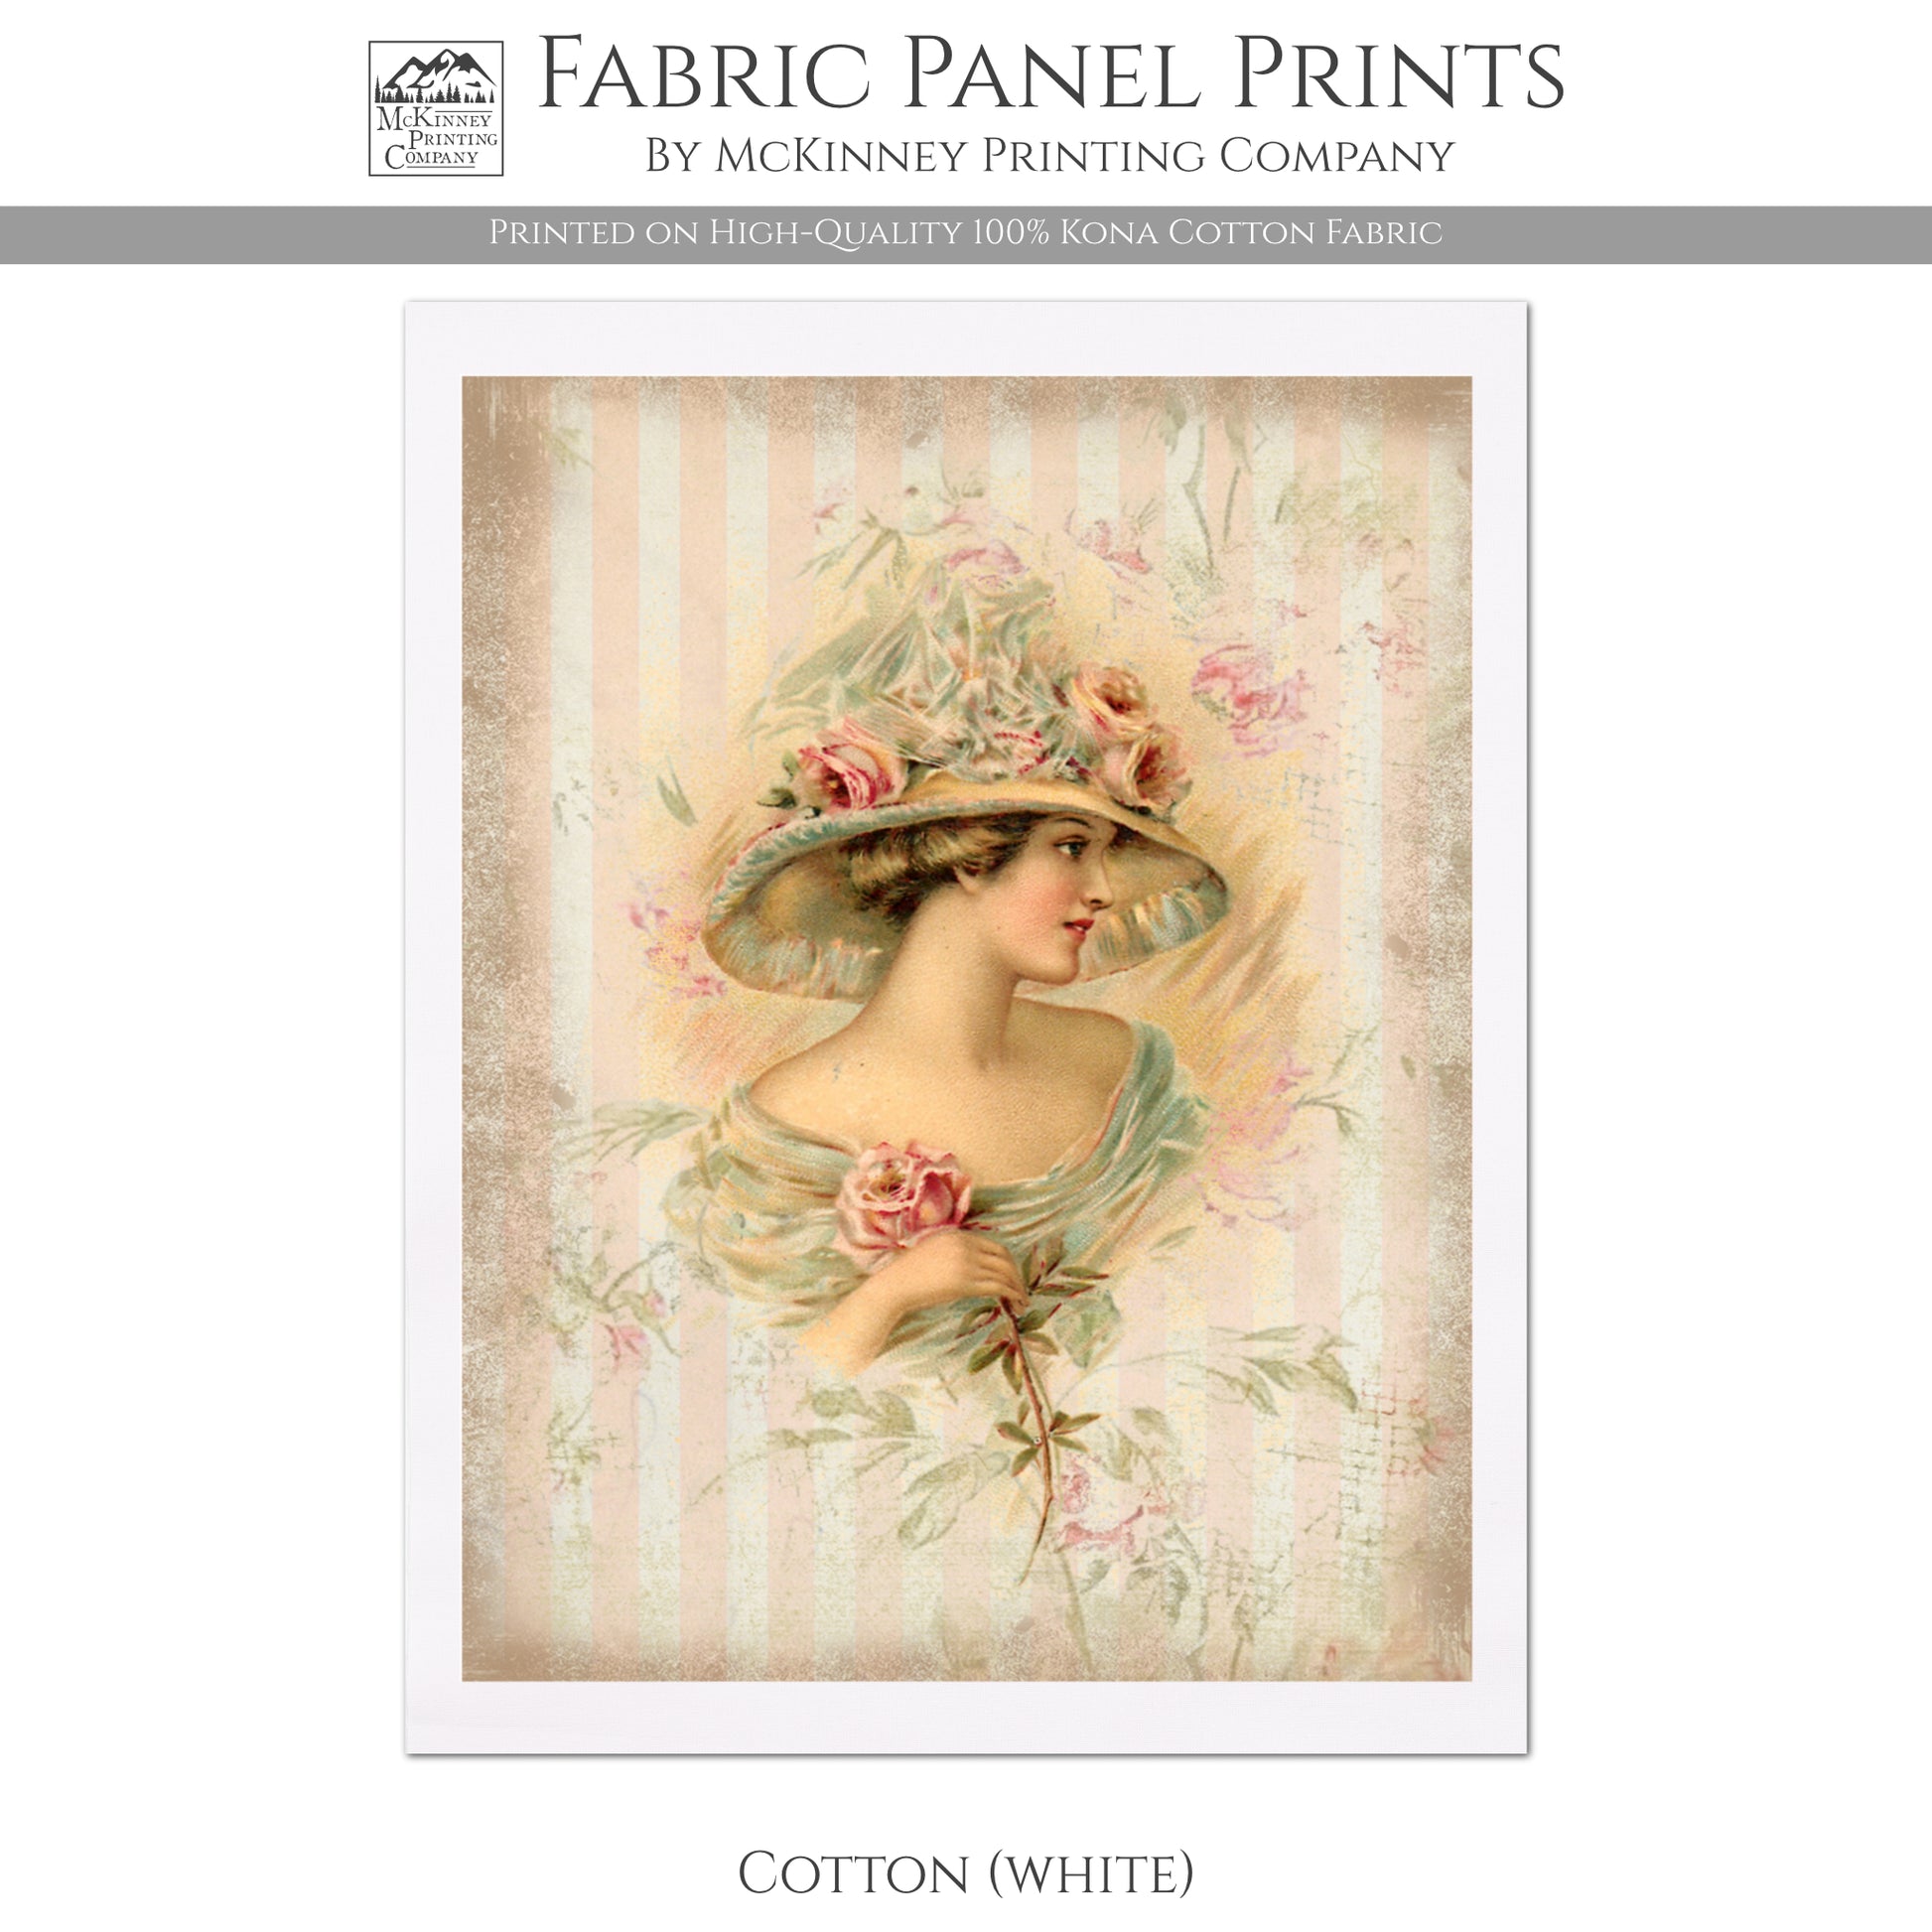 Victorian Art, Female Portrait, Woman in Hat, Fabric Panel Print - Cotton, White